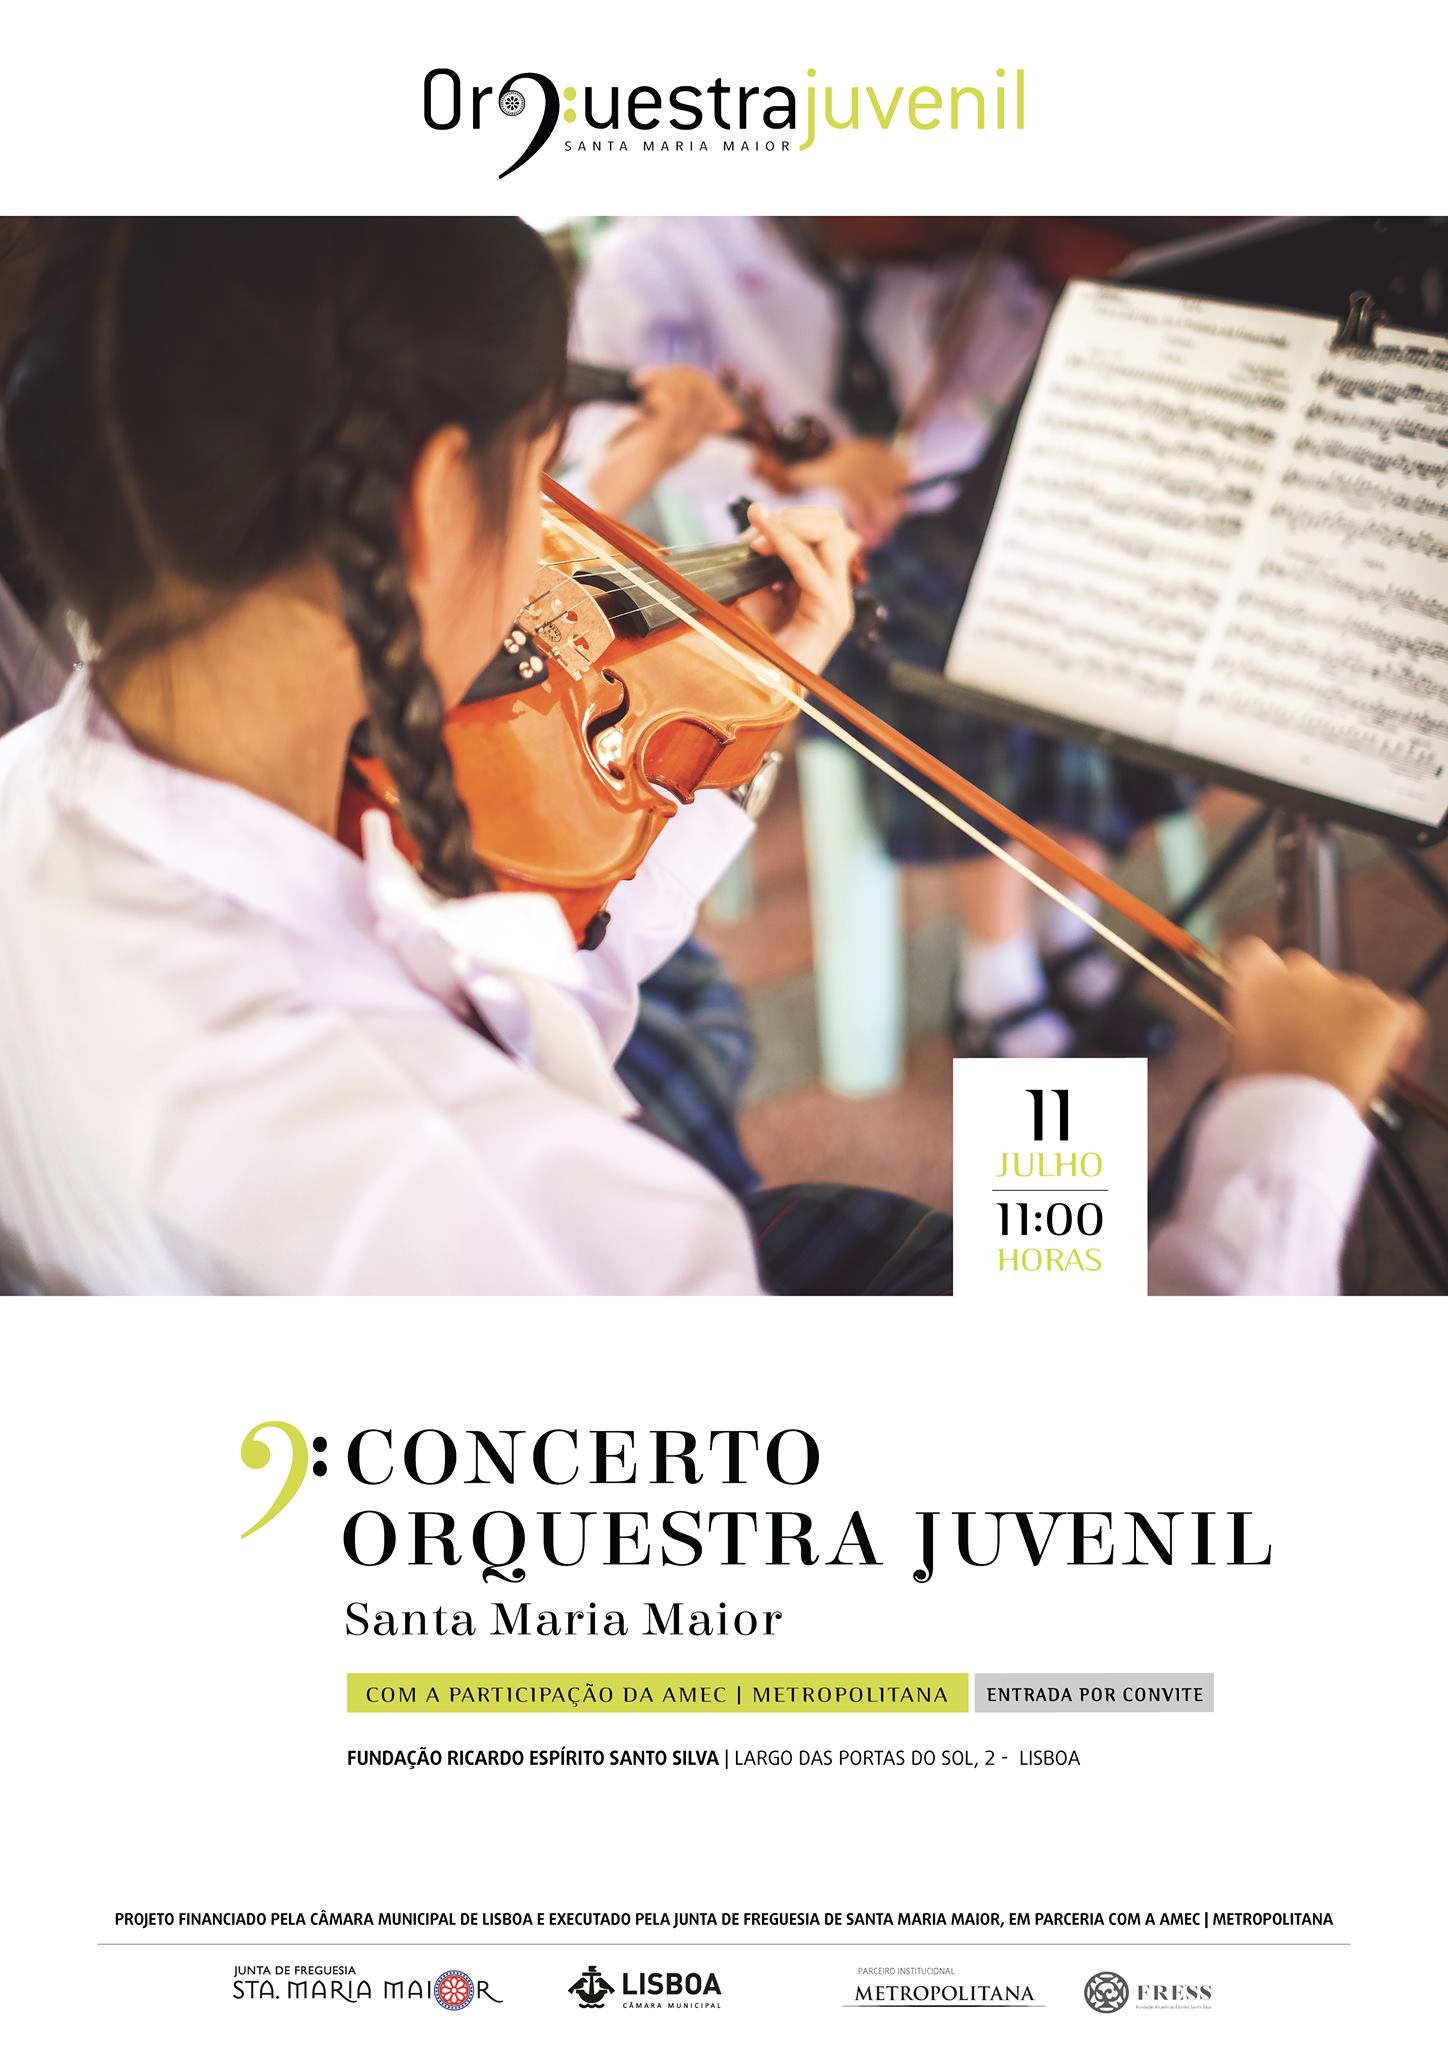 Concerto da Orquestra Juvenil de Santa Maria Maior